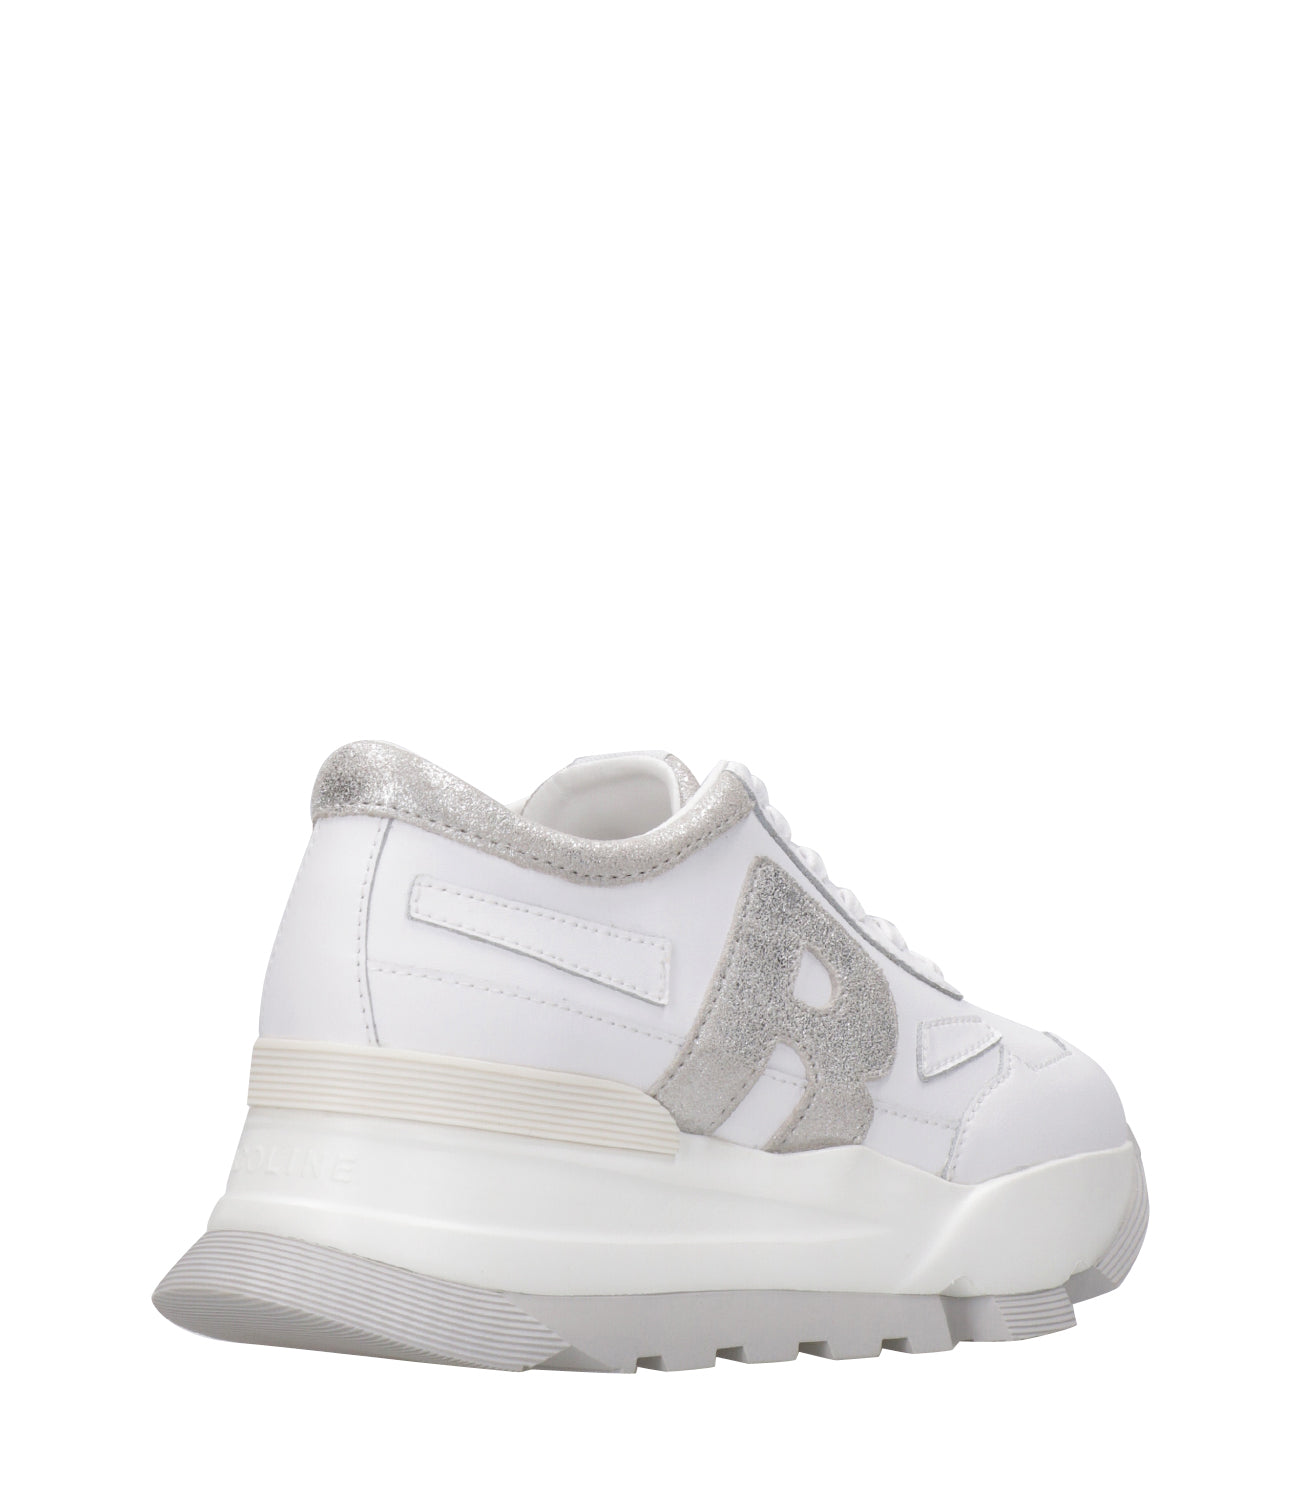 Rucoline | Sneakers Aki 304 Soft White and Silver